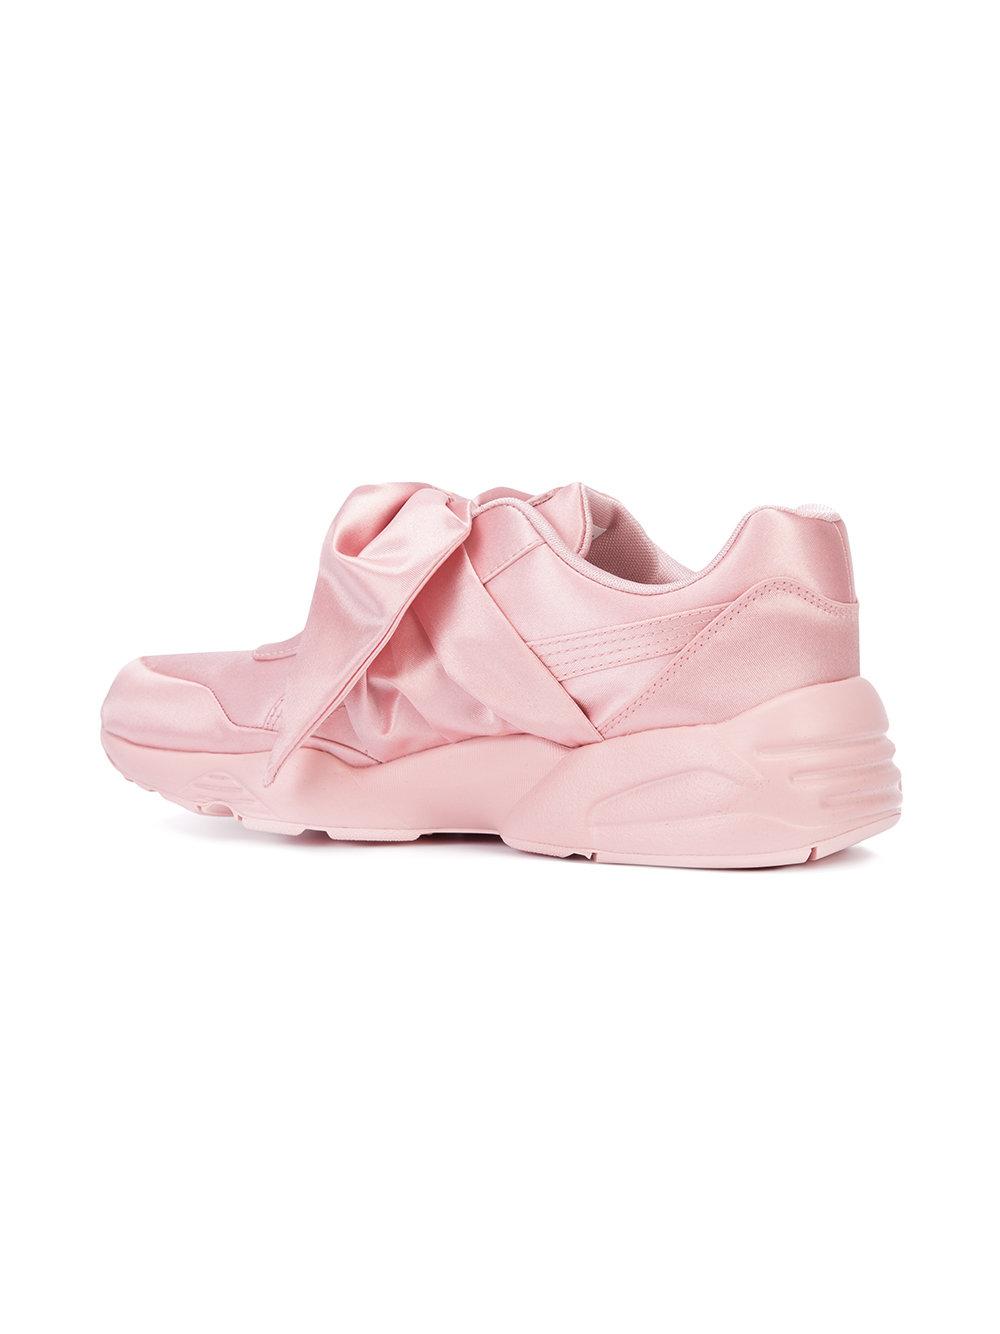 Puma Fenty X Rihanna Satin Bow Sneakers in Pink | Lyst